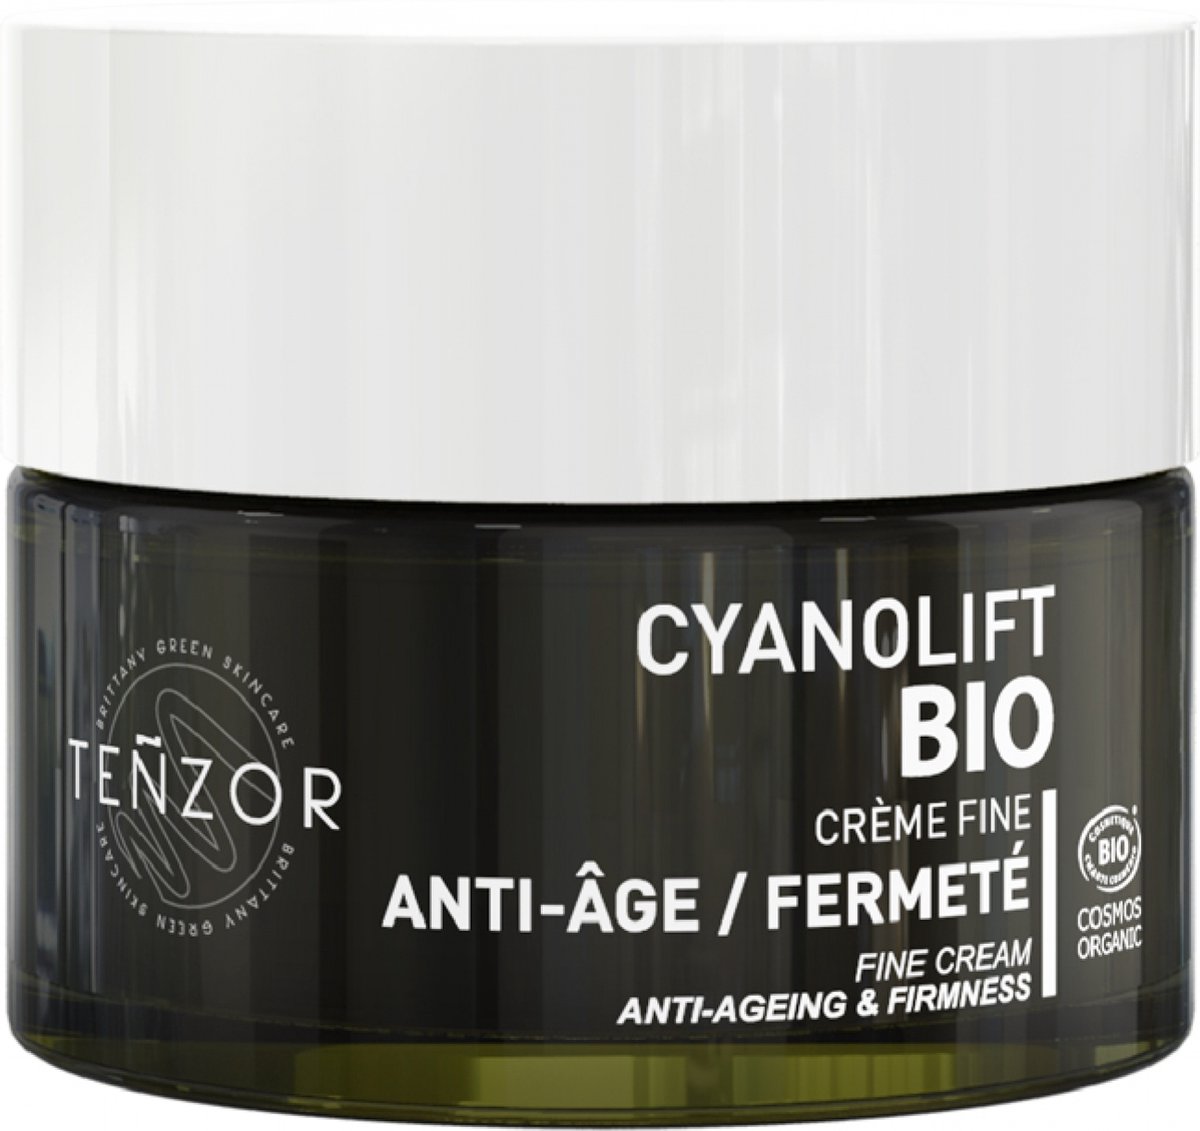 Teñzor Cyanolift Bio Anti-Ageing / Verstevigende Fijne Crème 50 ml